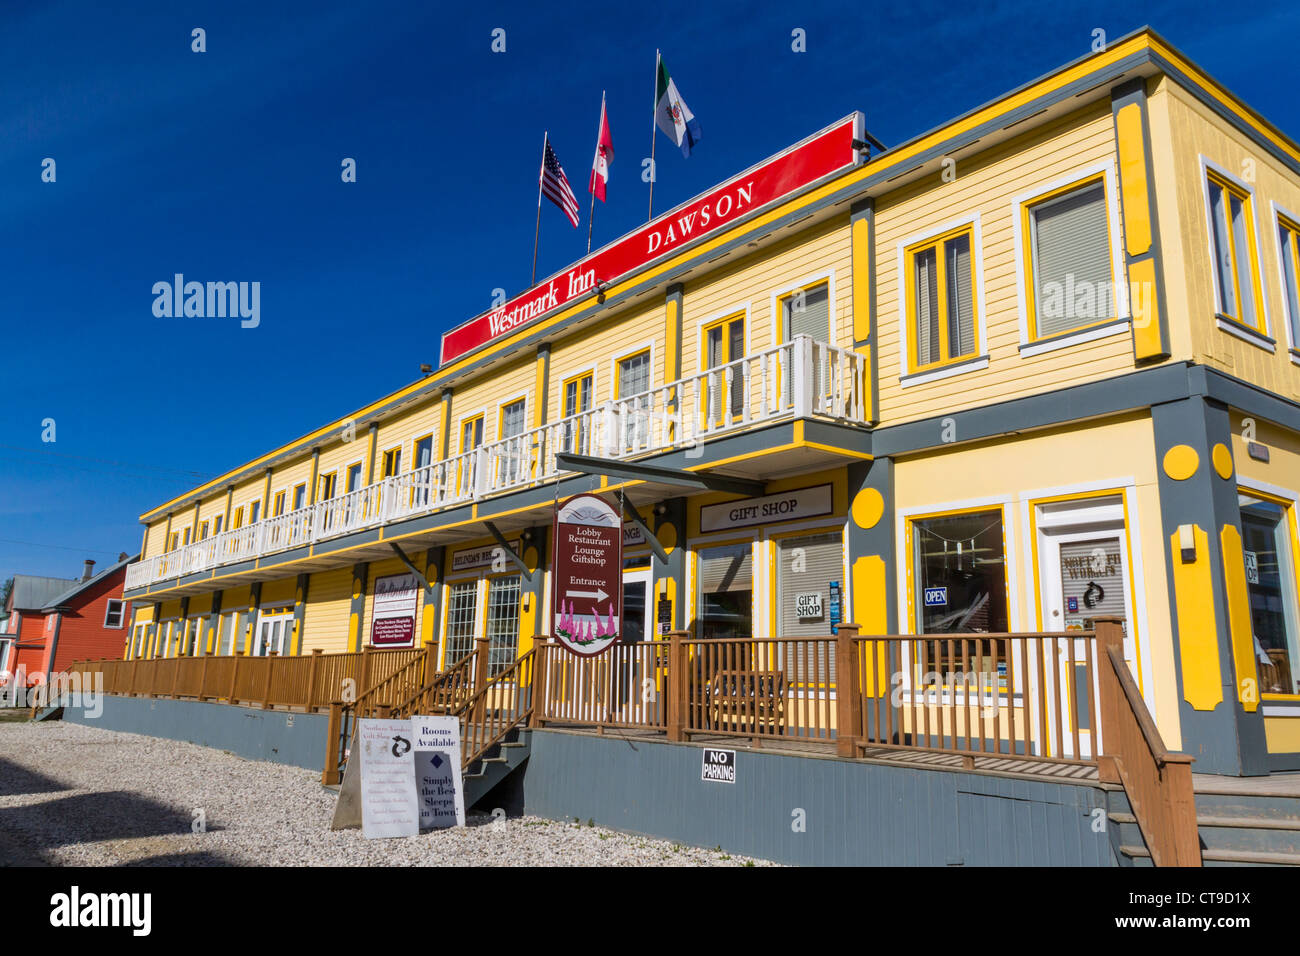 Westmark Inn und Dirt Streets in Dawson City, Yukon Territory, Kanada. Stockfoto